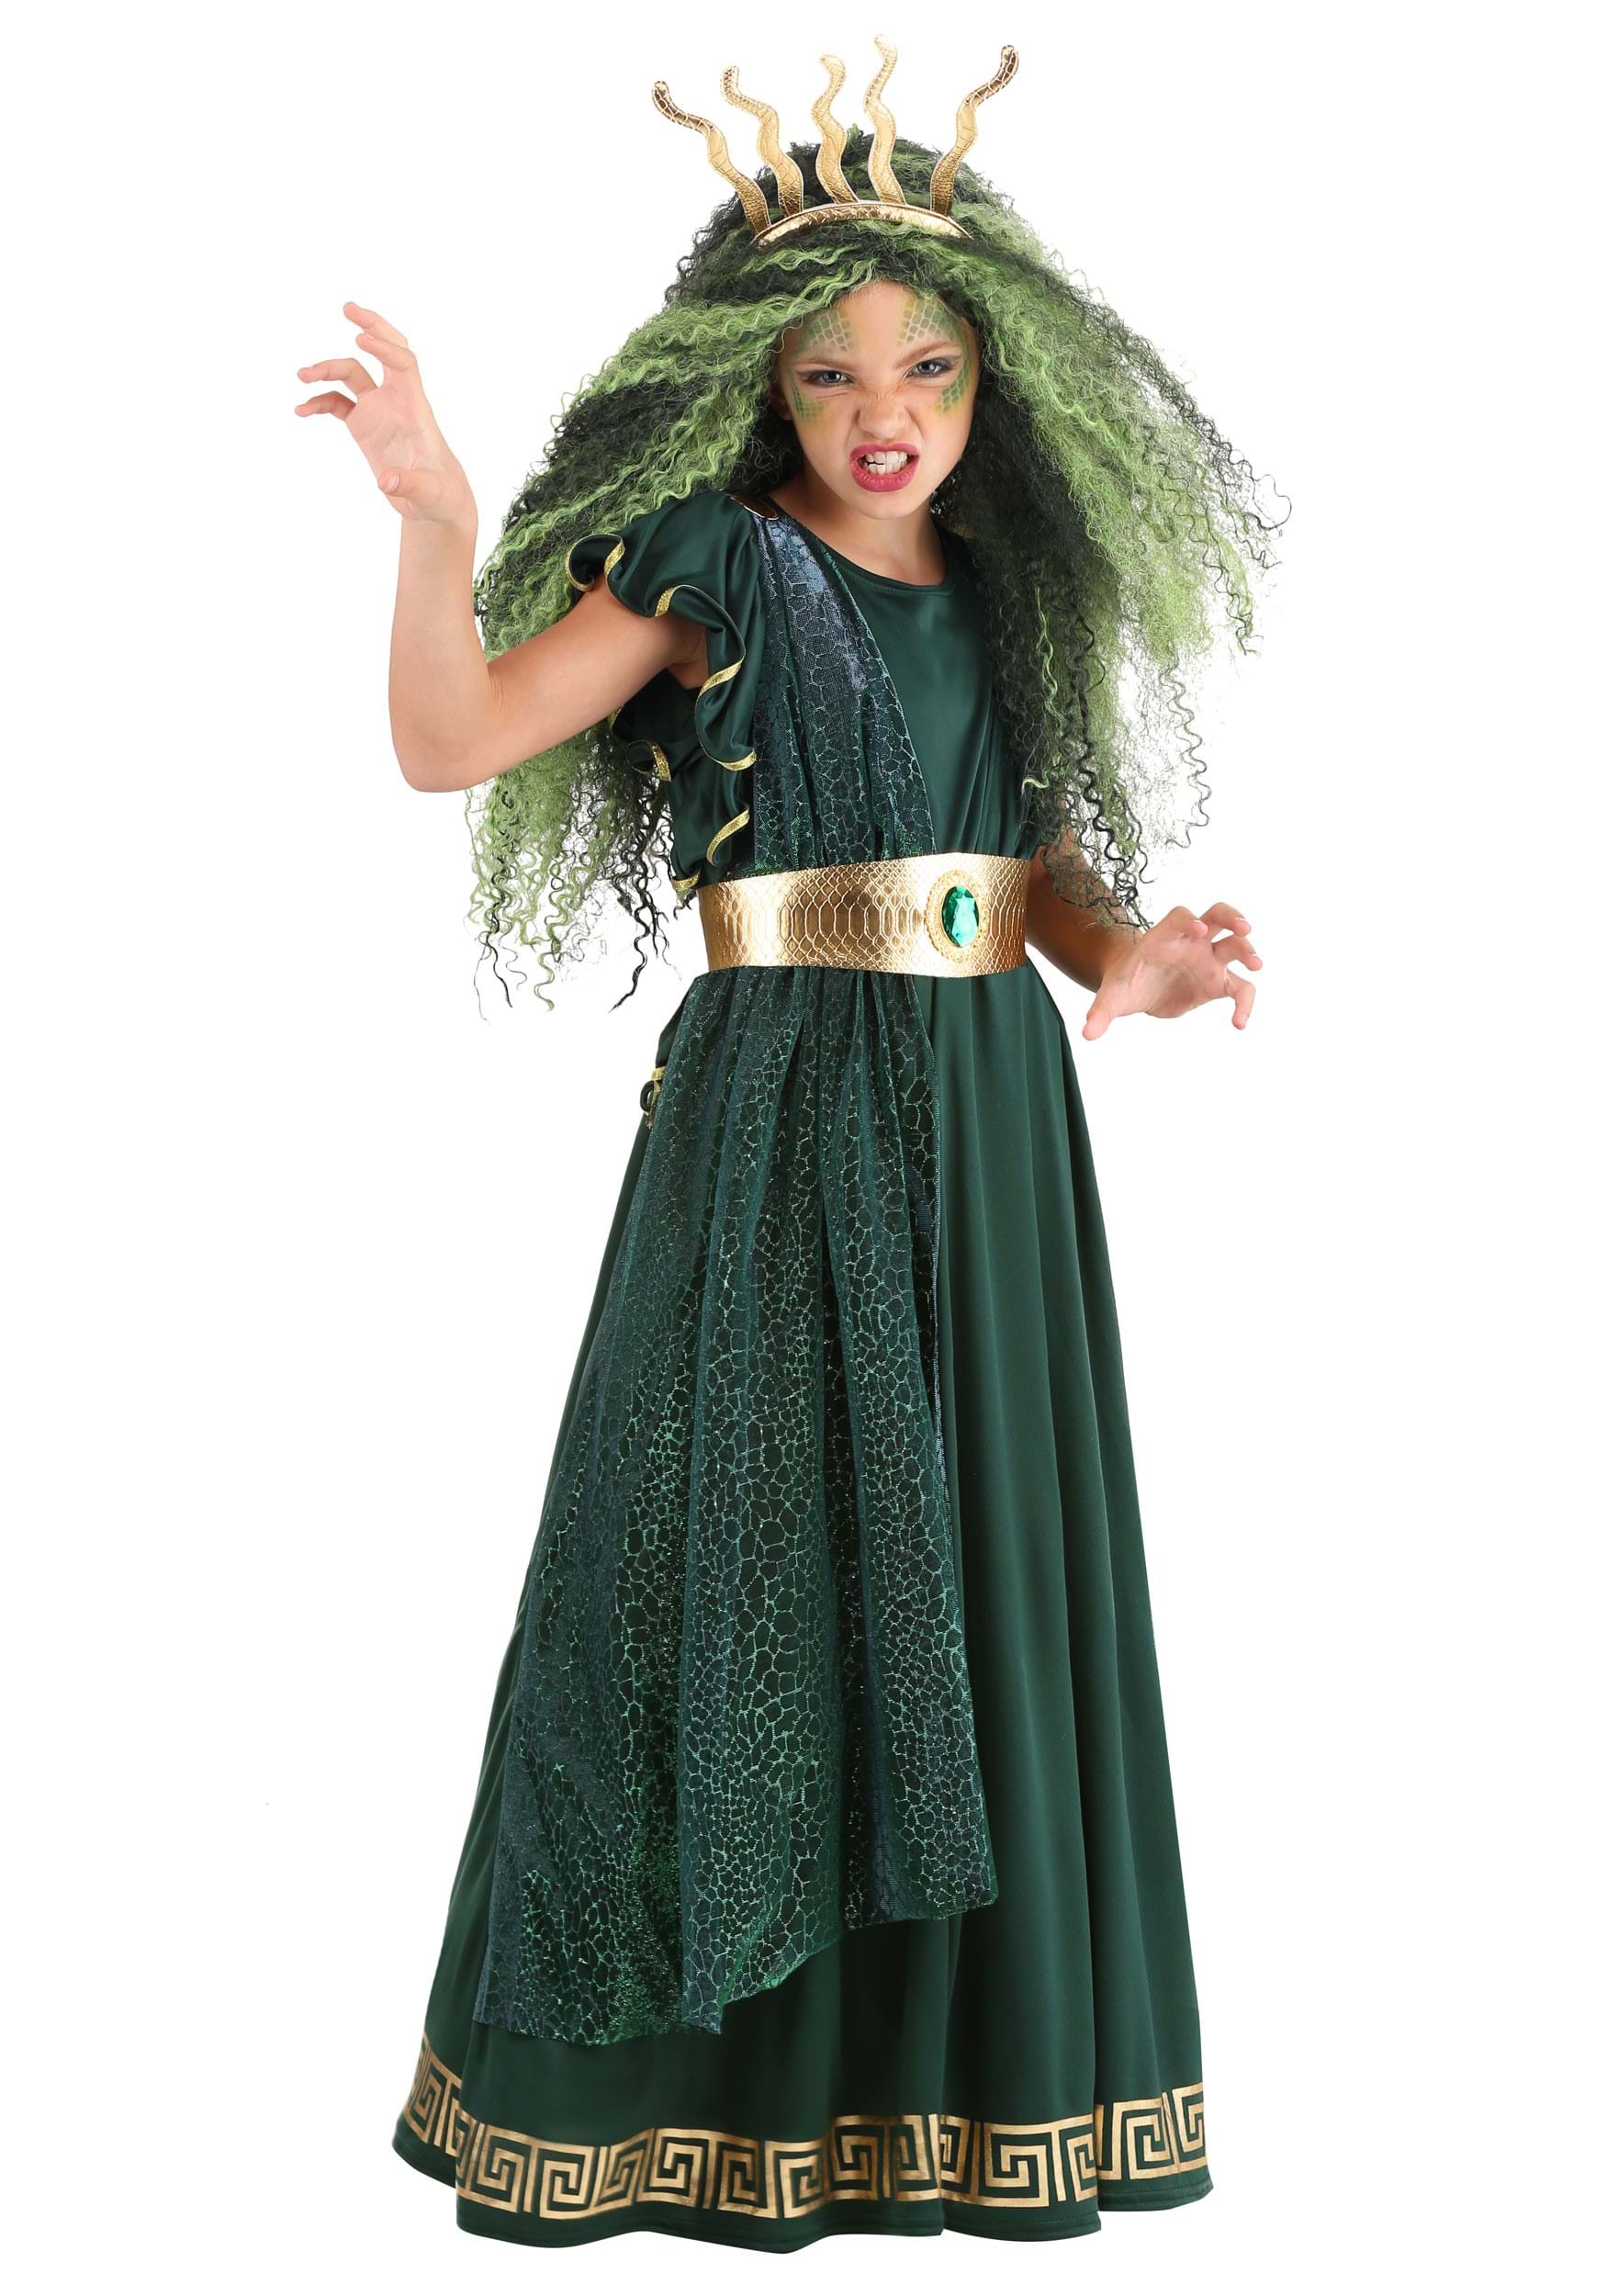 Photos - Fancy Dress FUN Costumes Medusa Costume for Girls Green/Brown FUN1745CH